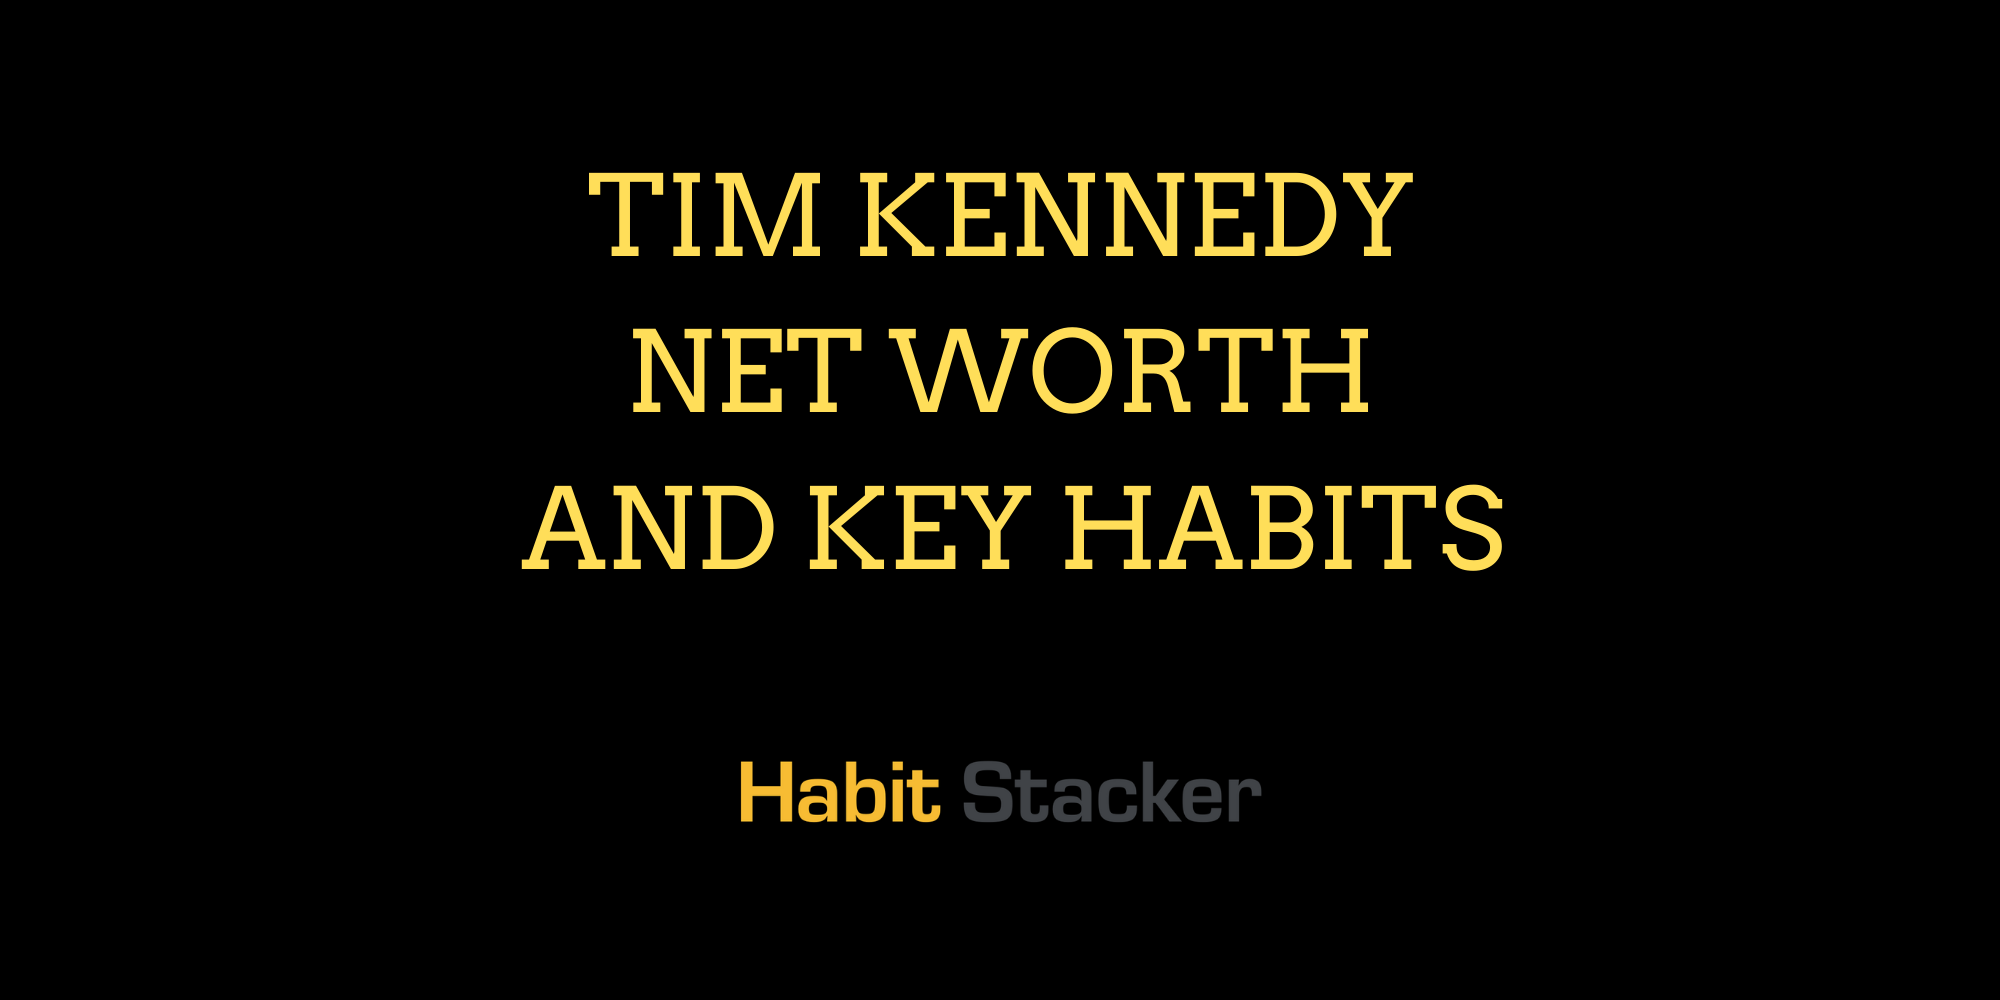 Tim Kennedy Net Worth and Key Habits